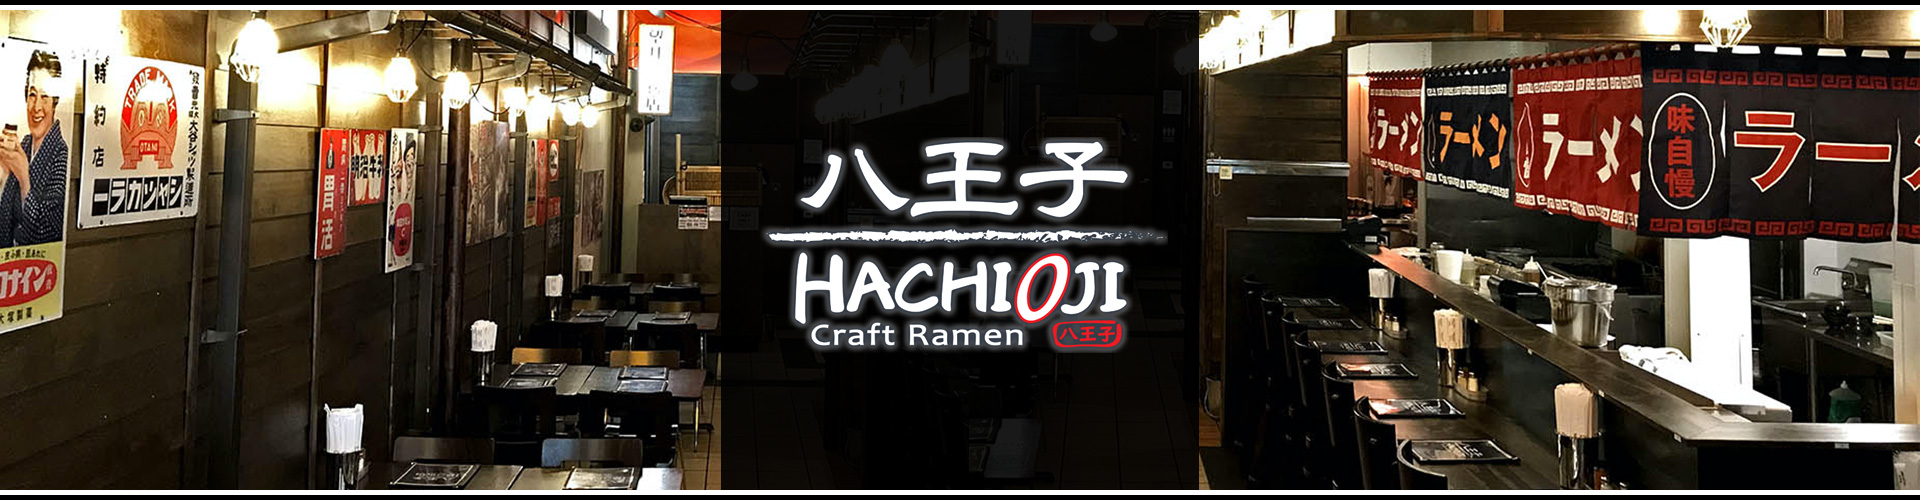 Hachioji Craft Ramen